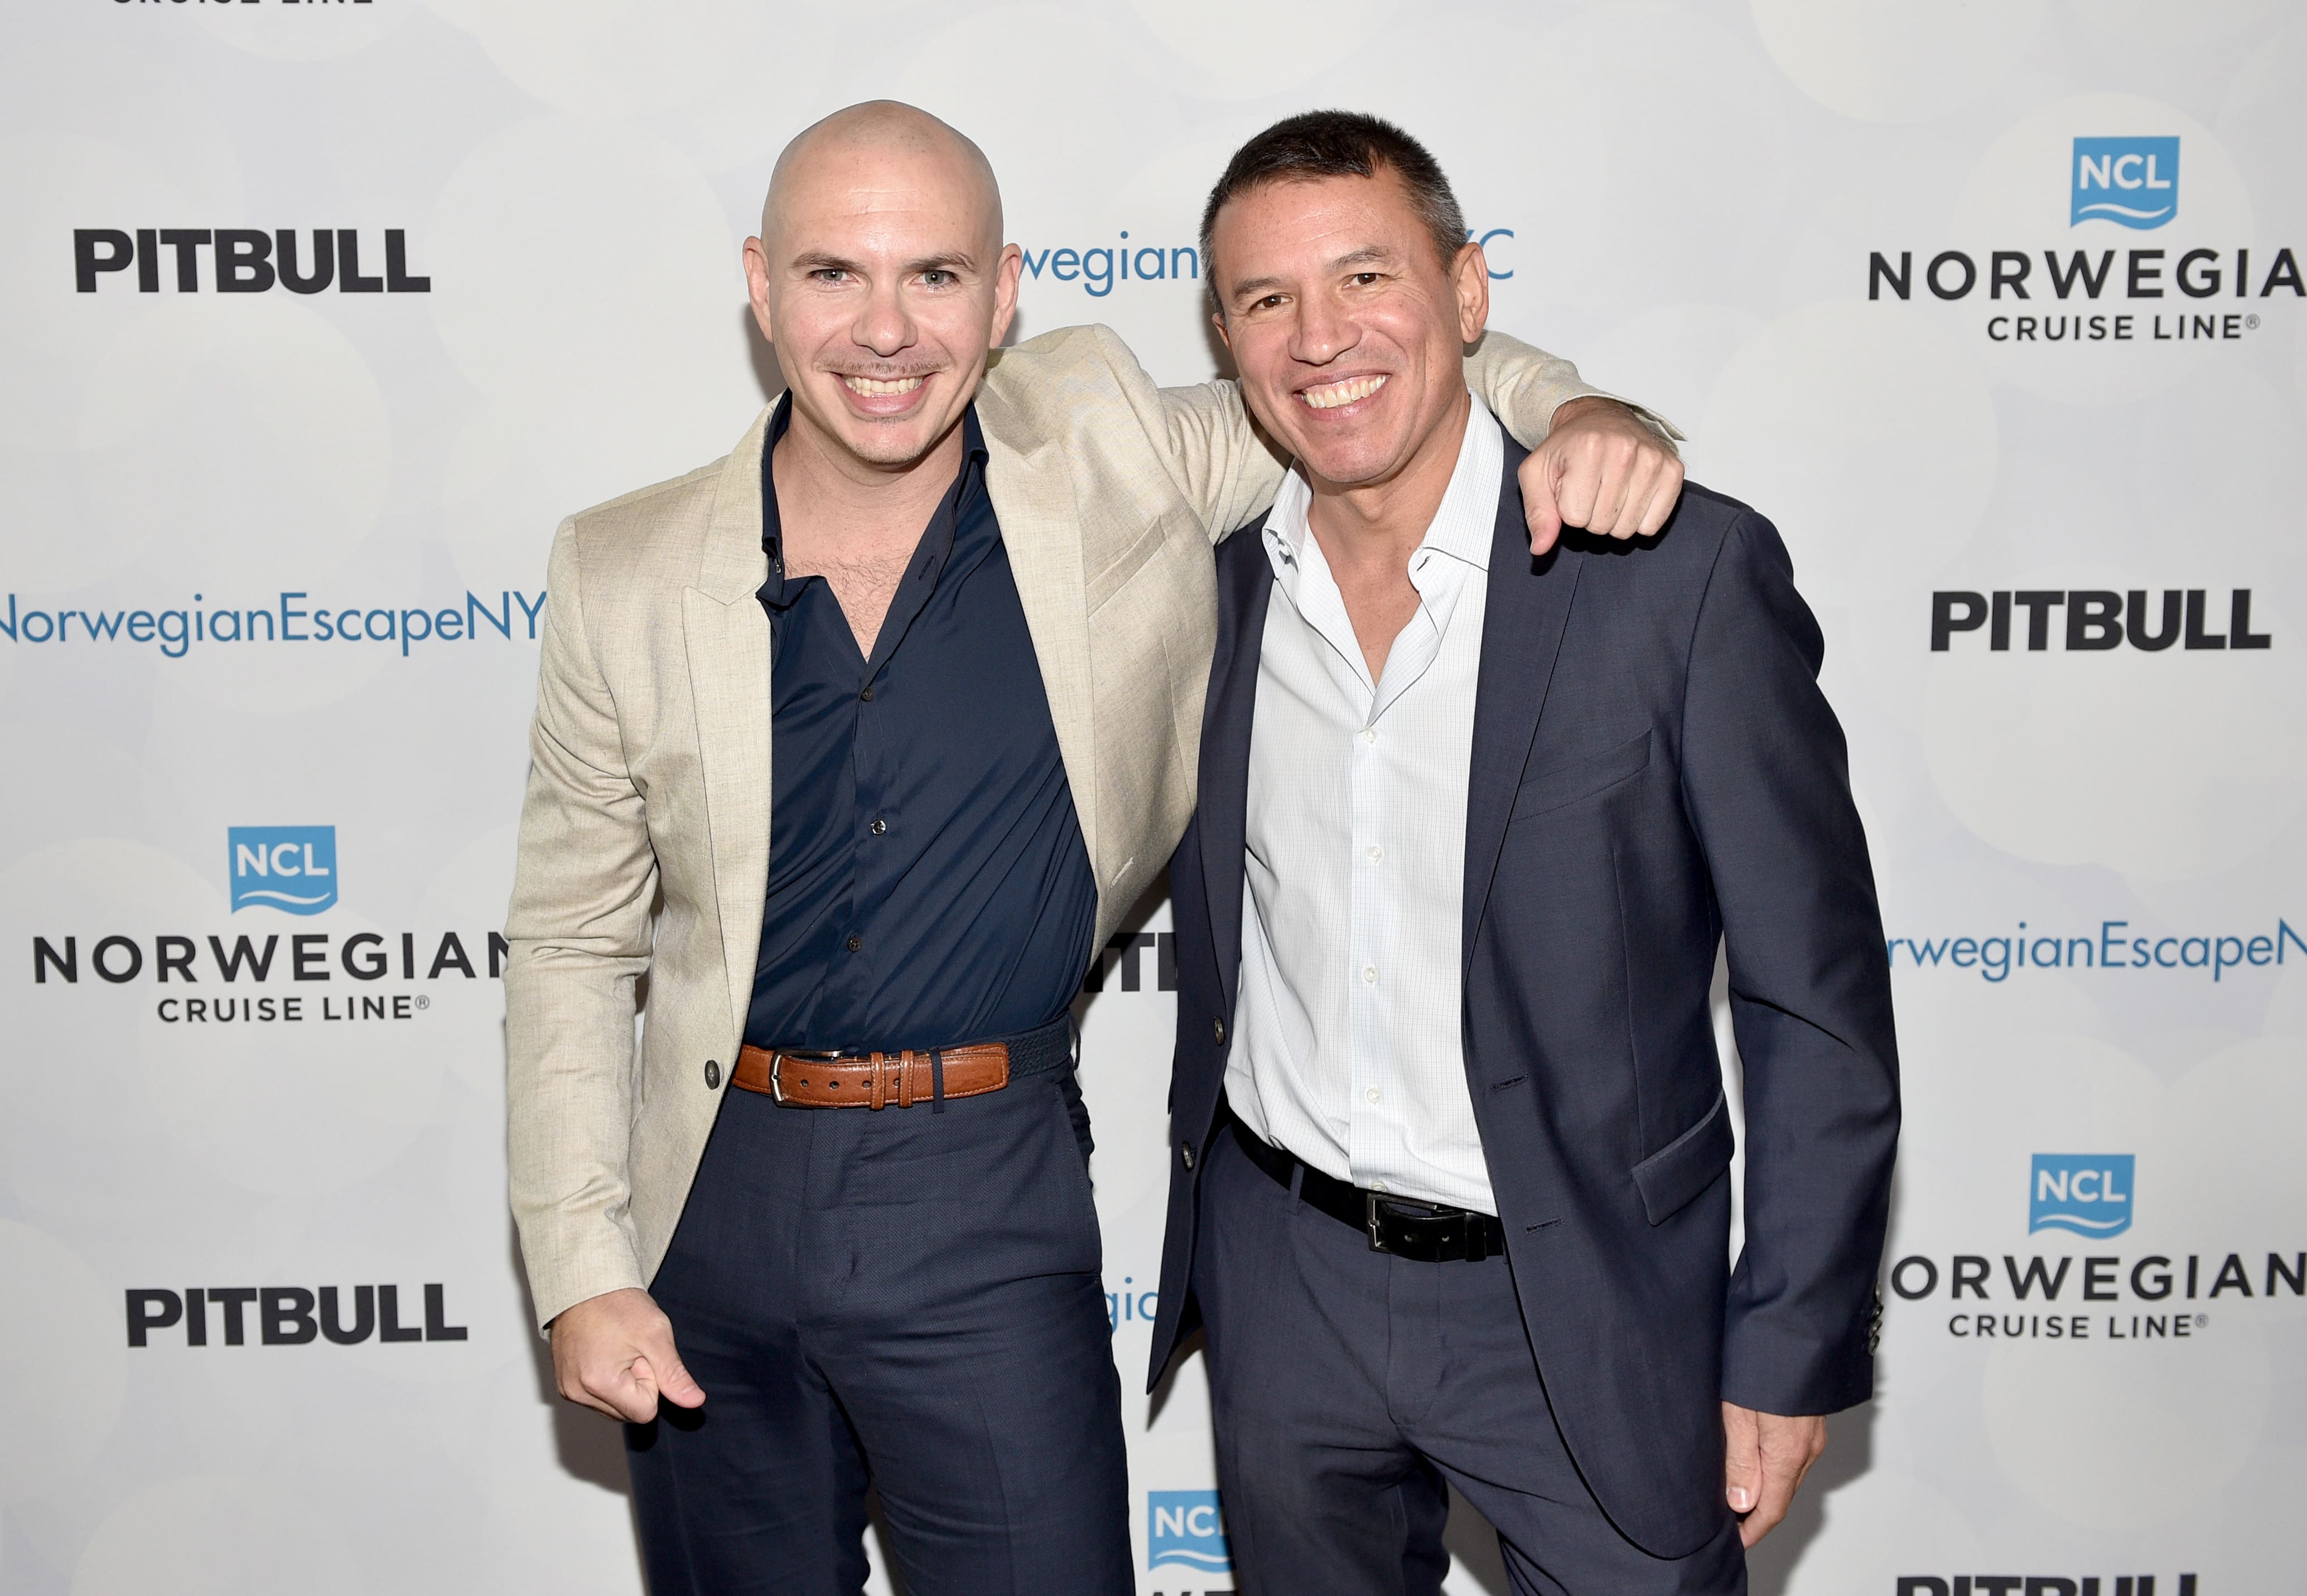 Norwegian Escape NYC Celebration with Pitbull